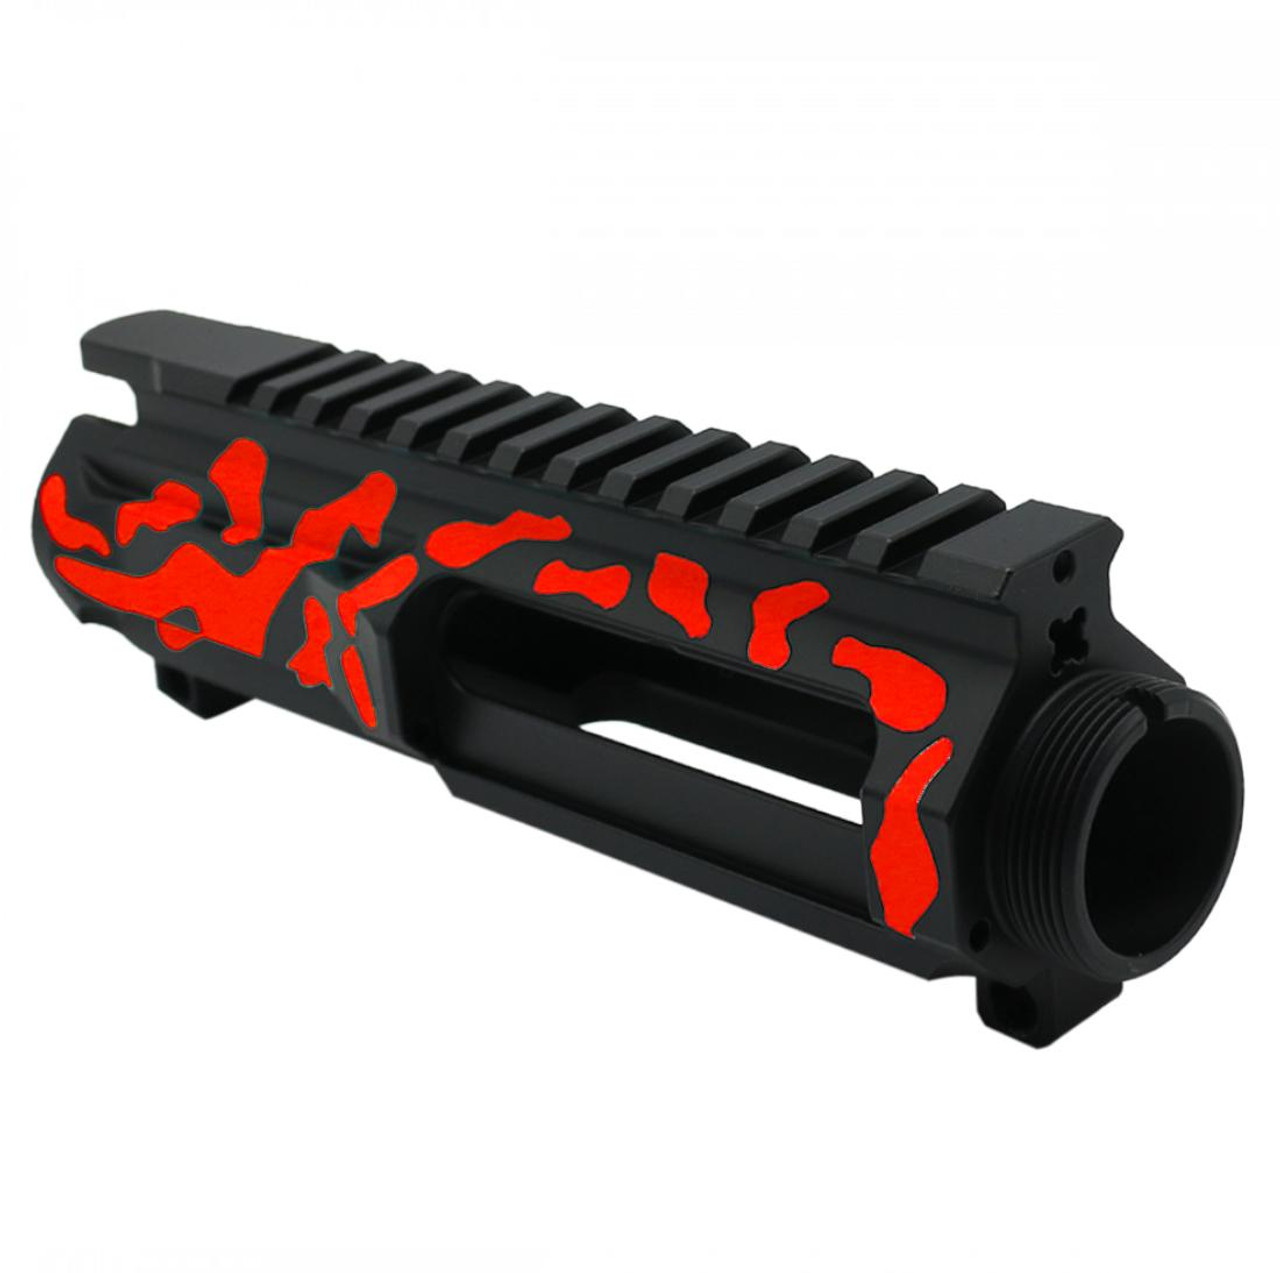 MCS CERAKOTE CAMO AR-15/47/9/300 Billet Upper Receiver Black and Red - Made in USA 